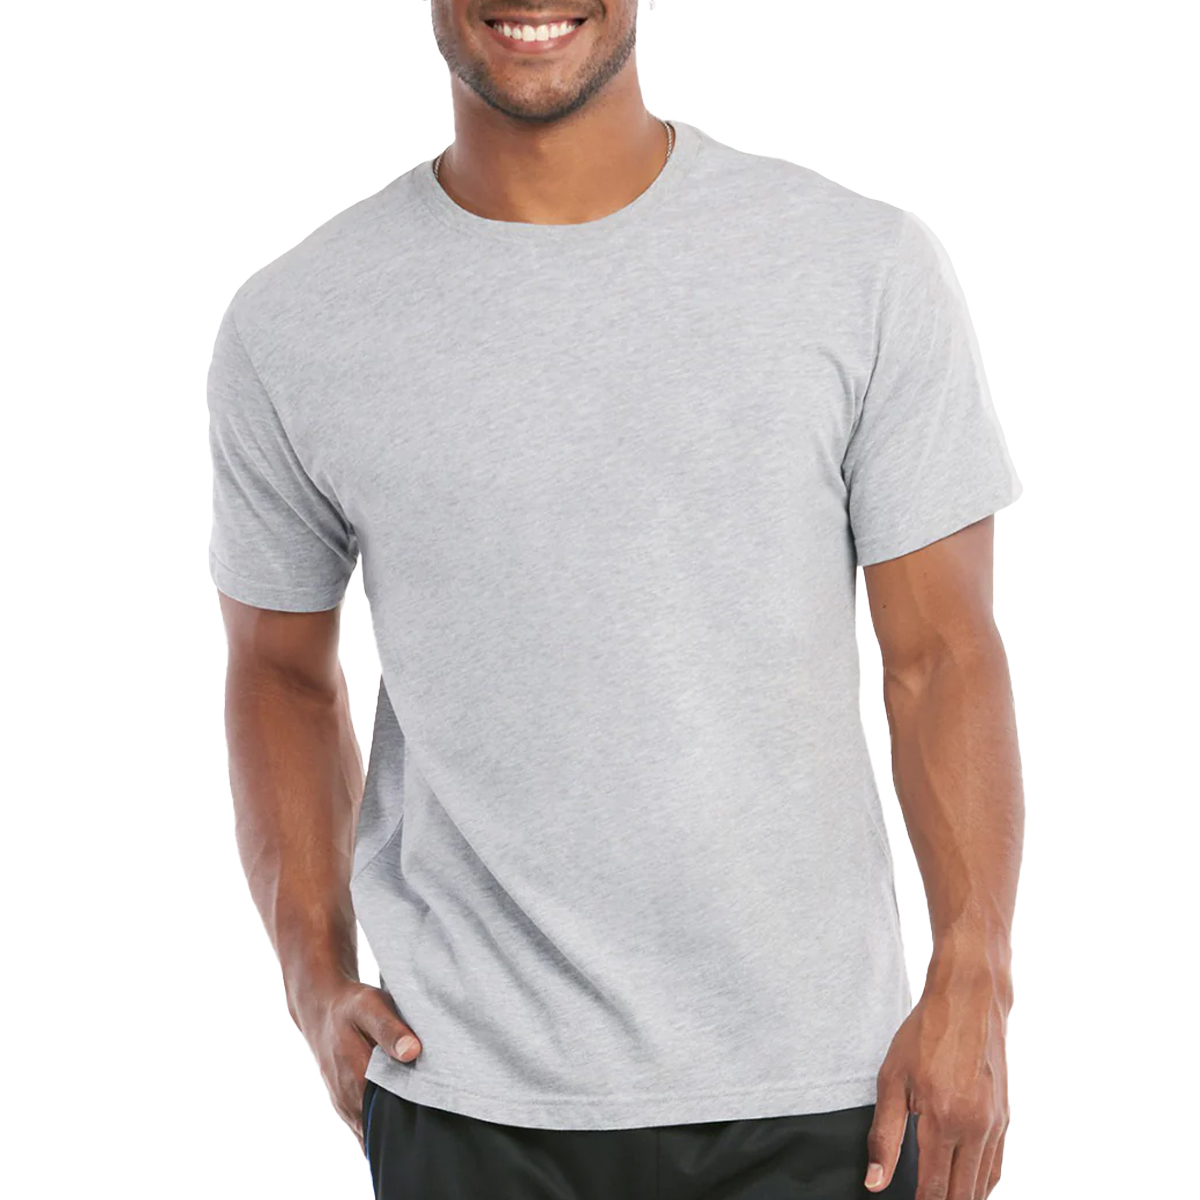 Wholesale Men's Crew Neck T-Shirts - Large, Grey - DollarDays